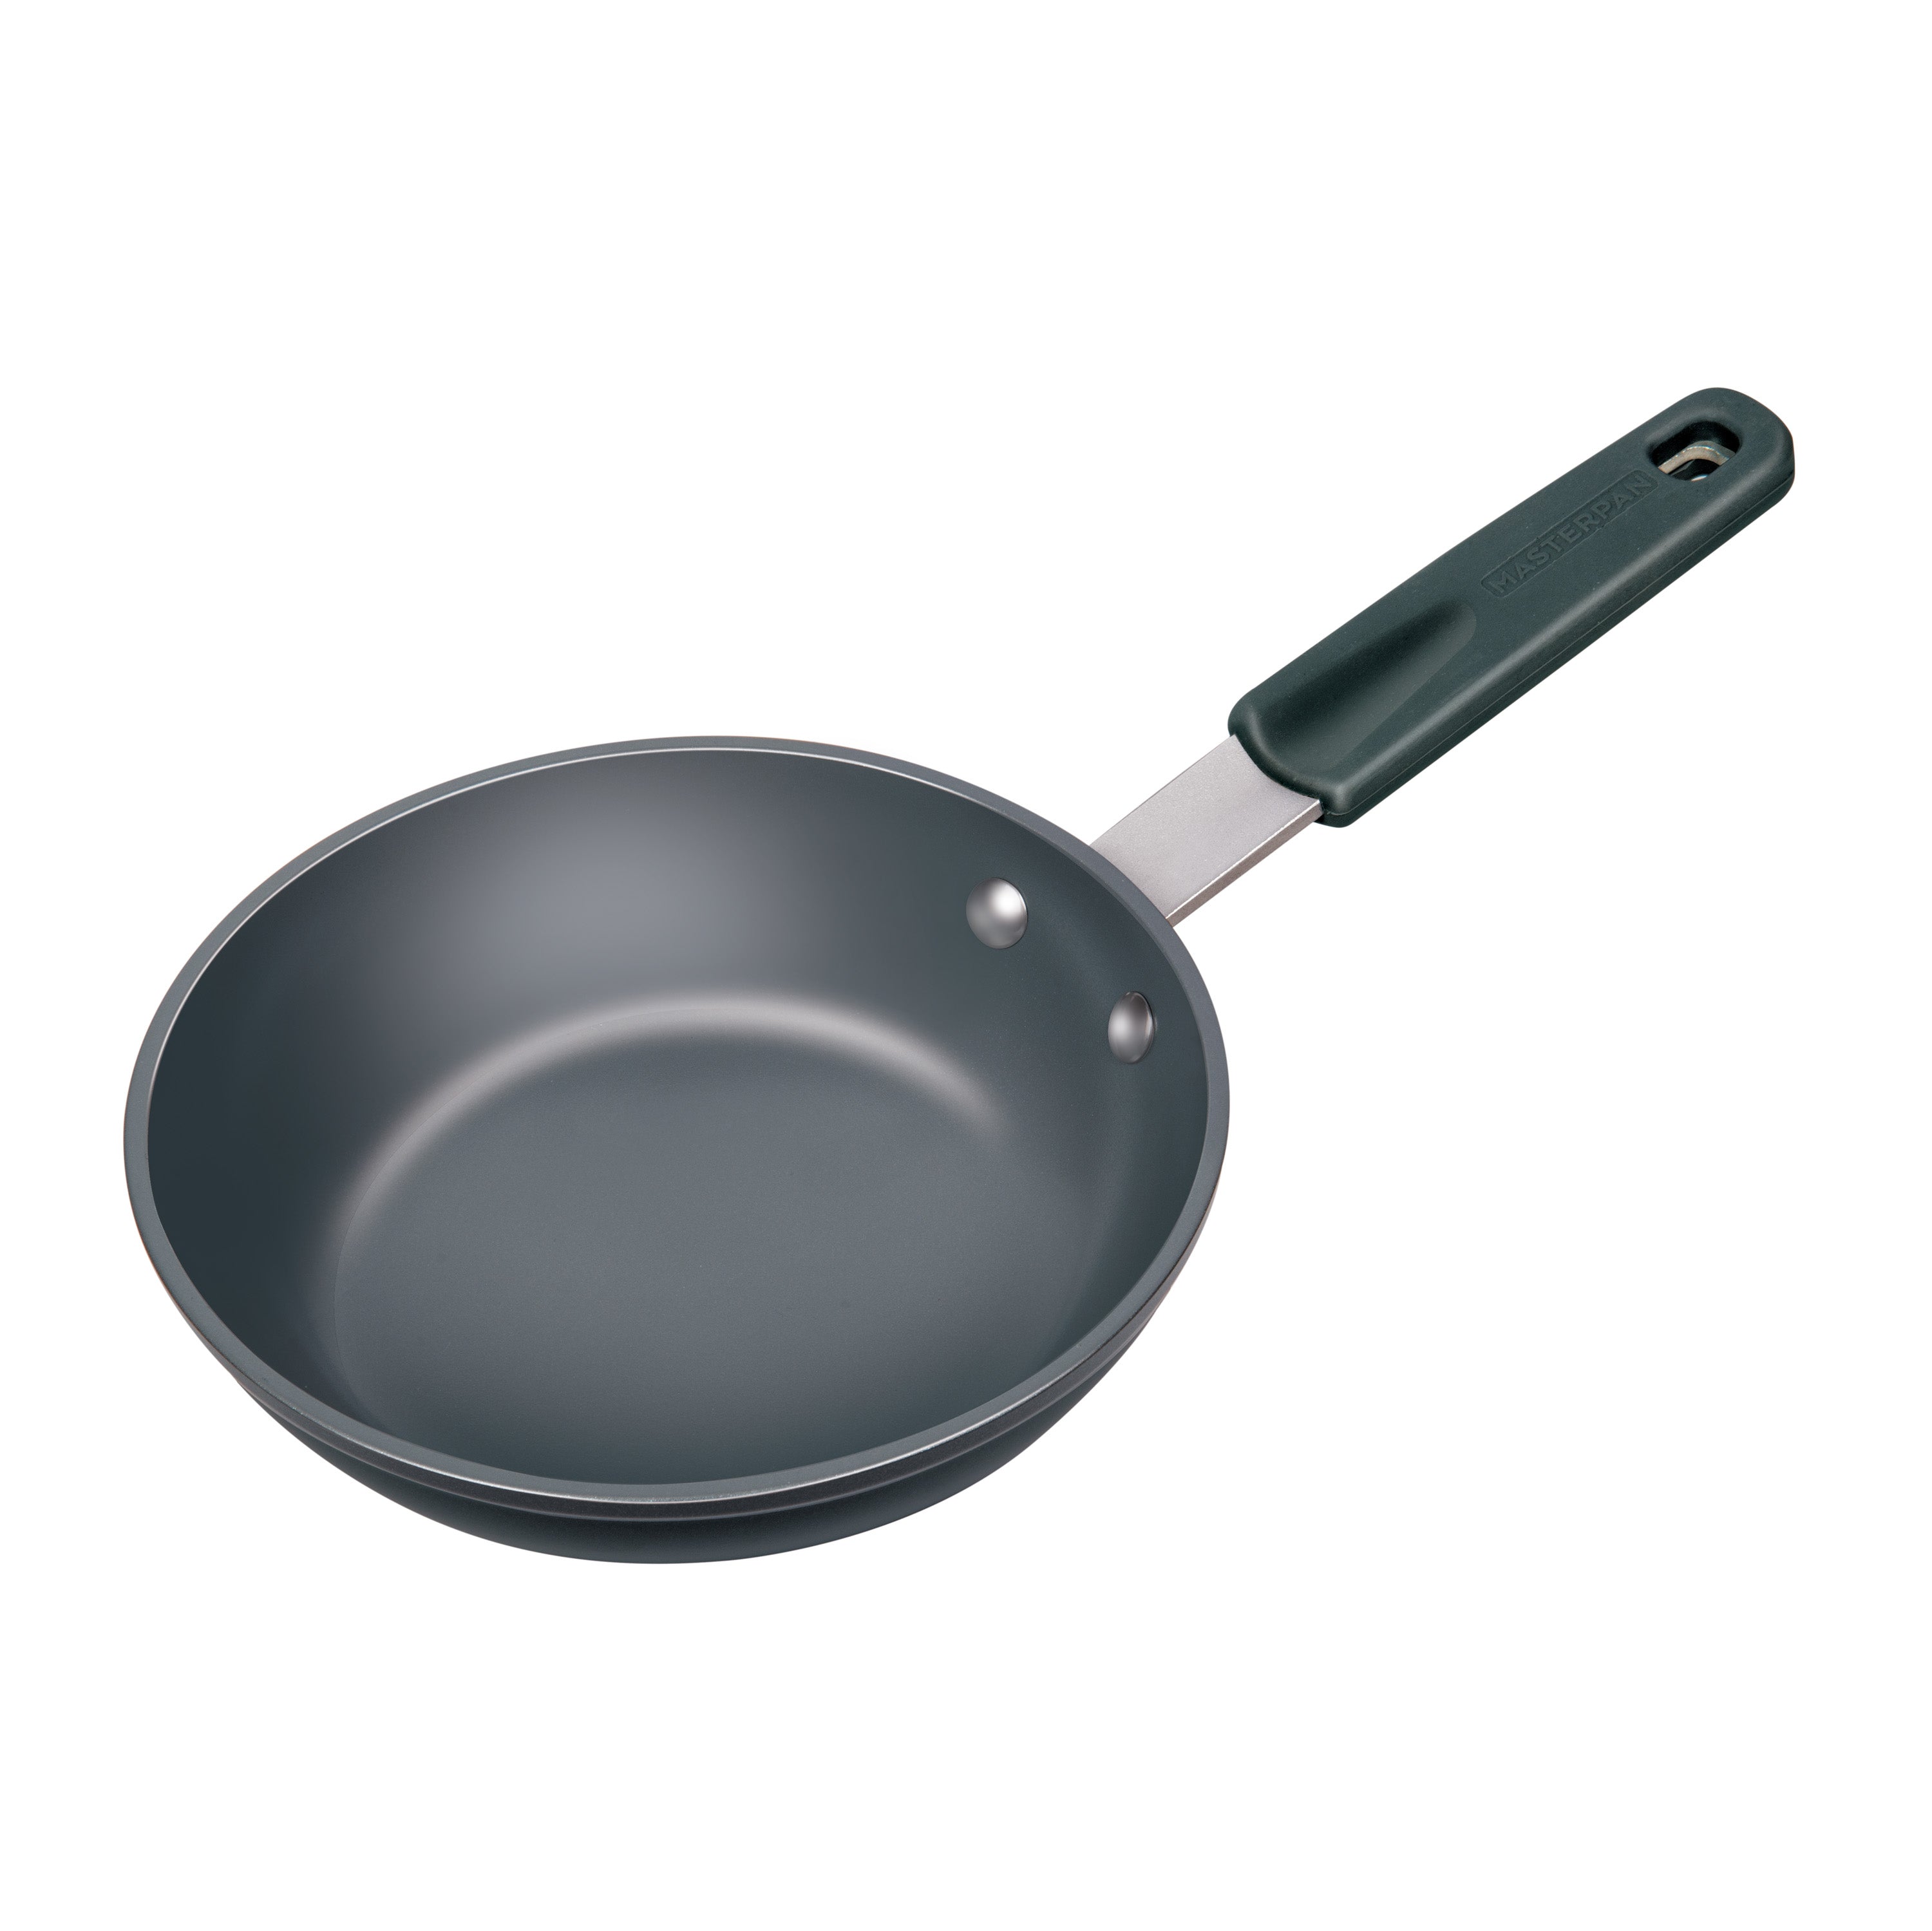 MasterPan MP-178 10 in. Grill Pan & Healthy Ceramic Non-Stick Aluminium Cookware with Bakelite Handle